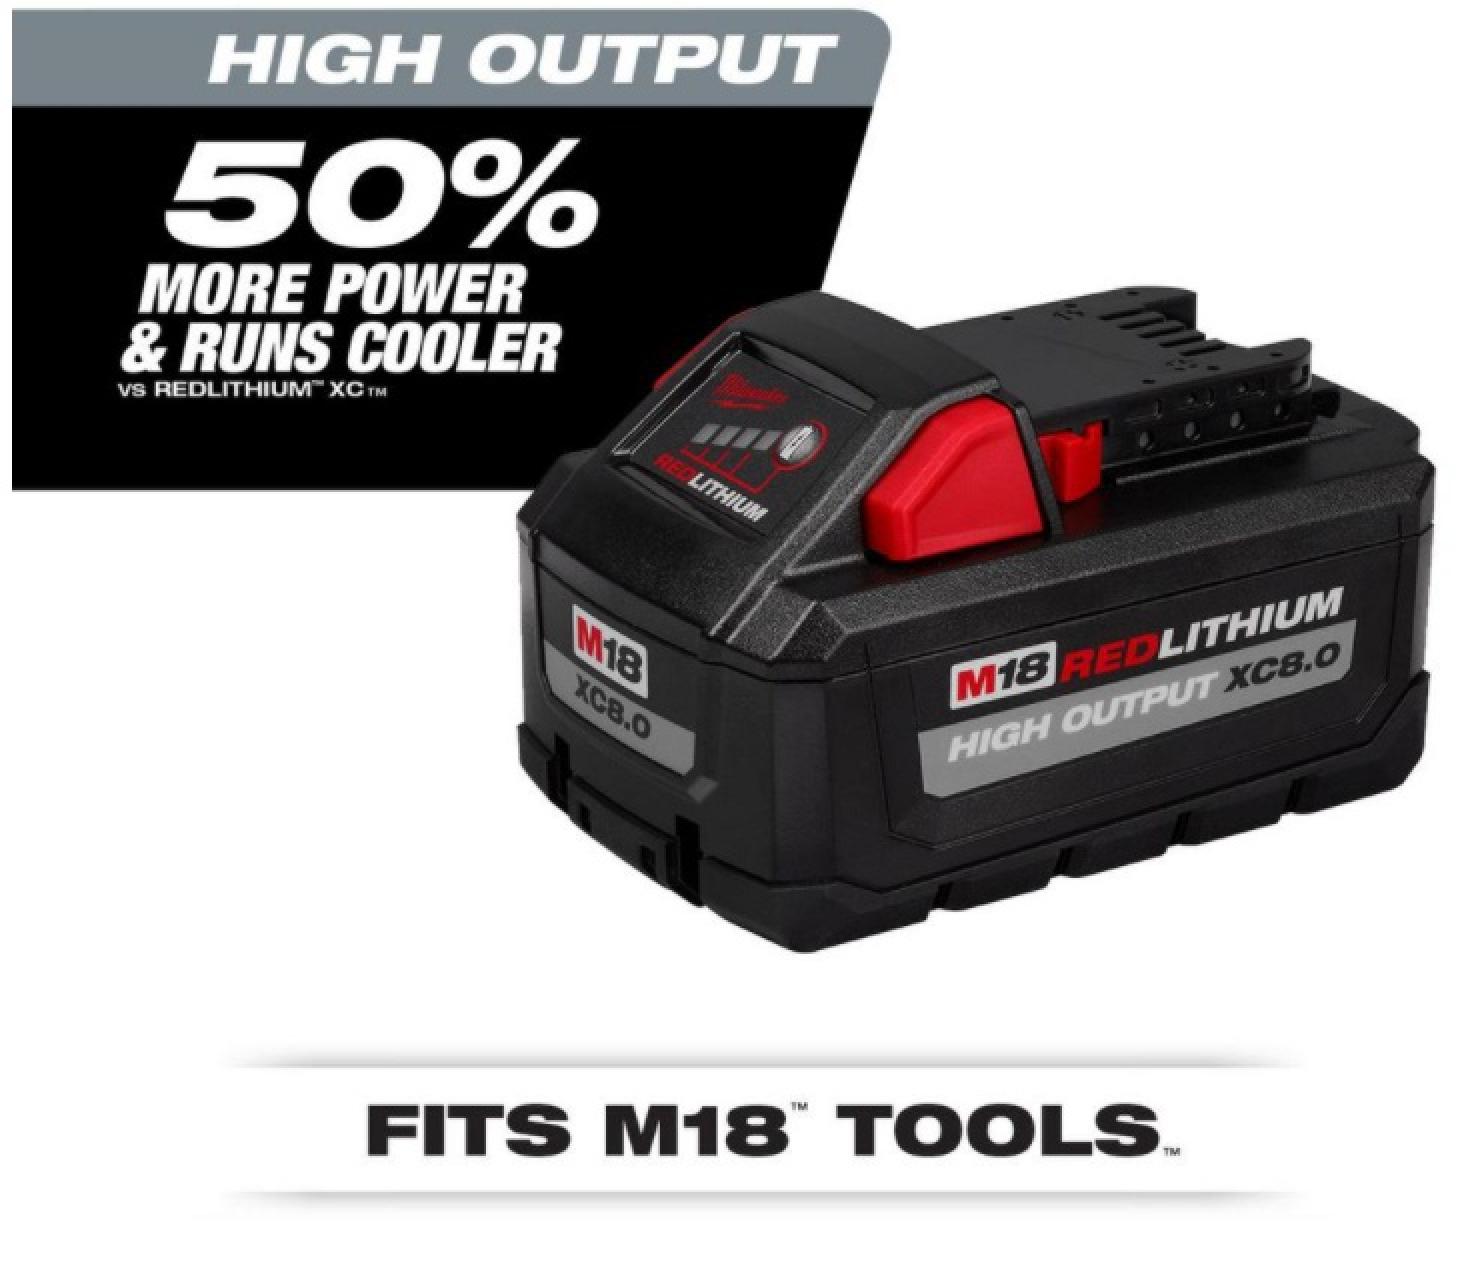 Milwaukee M18™ REDLITHIUM HIGH OUTPUT™ XC8.0 Battery